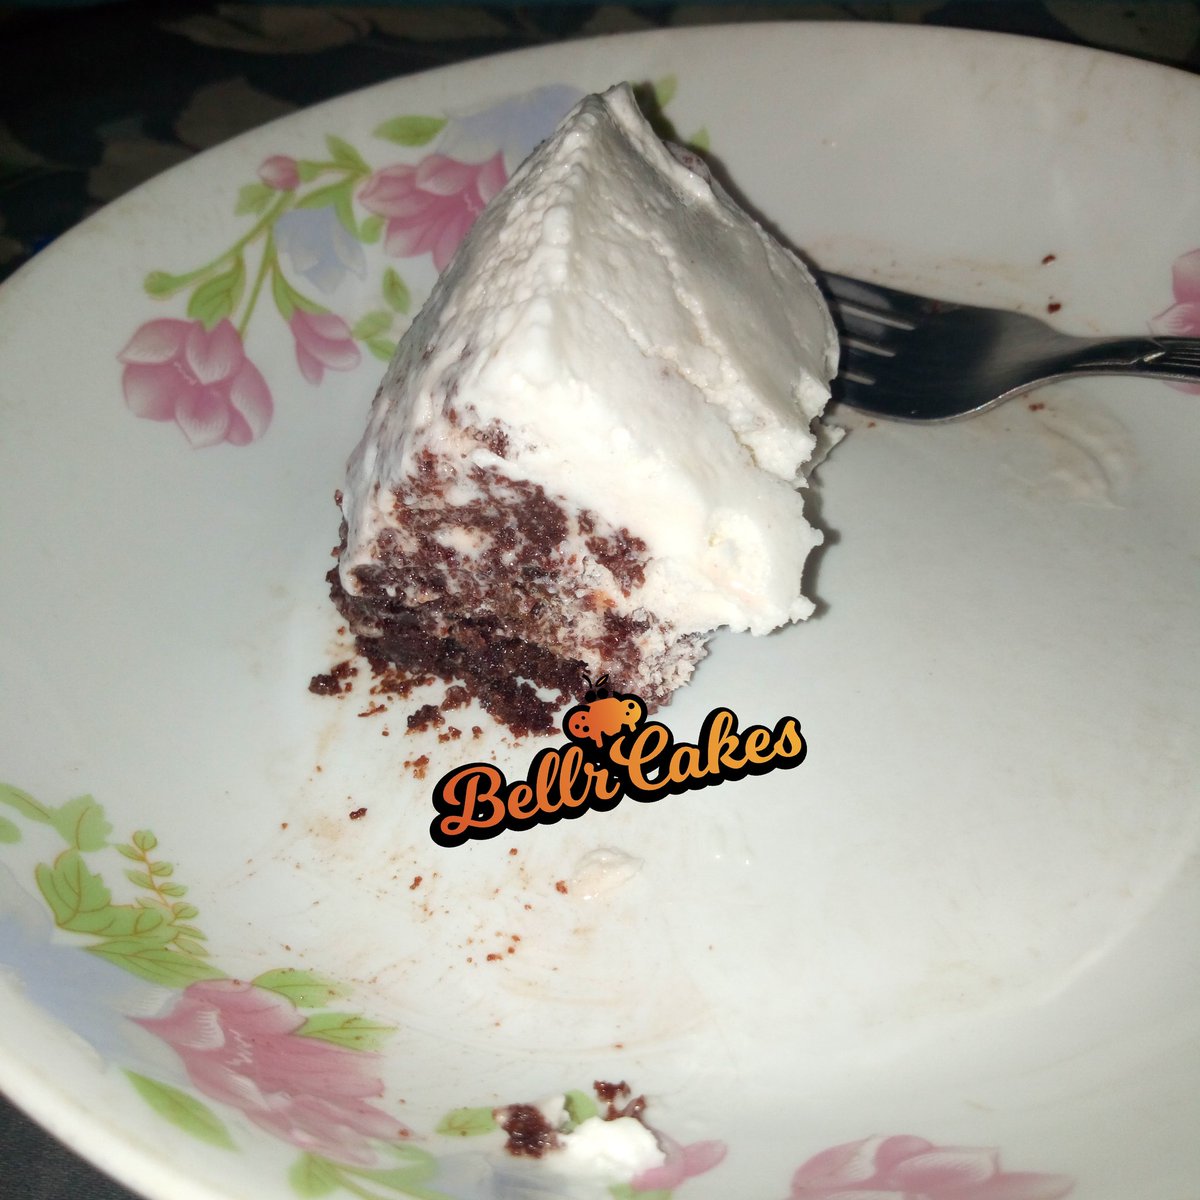 Ice cream cake is the new cocaine 😏

#cakes #lagoscakes #phcakes #cakesinlagos #cakesbybellr #bellrcakes #cakesinnigeria #naijacakes #naijabaker #lagosbaker #cakegram #cakestagram… instagram.com/p/BuJ9Y_fHvZd/…